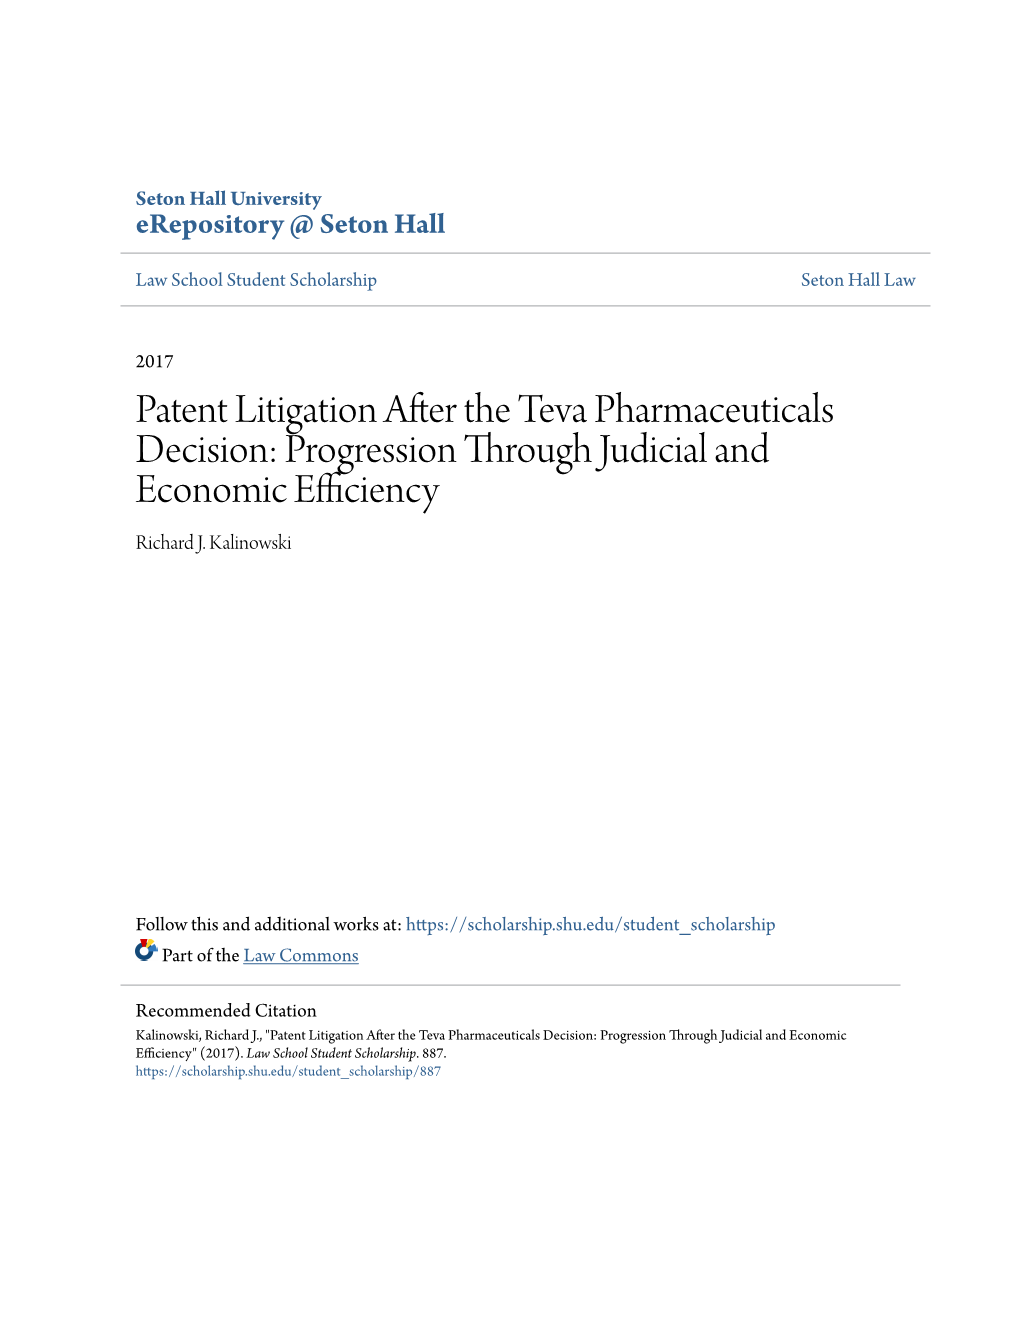 Patent Litigation After the Teva Pharmaceuticals Decision: Progression Through Judicial and Economic Efficiency Richard J